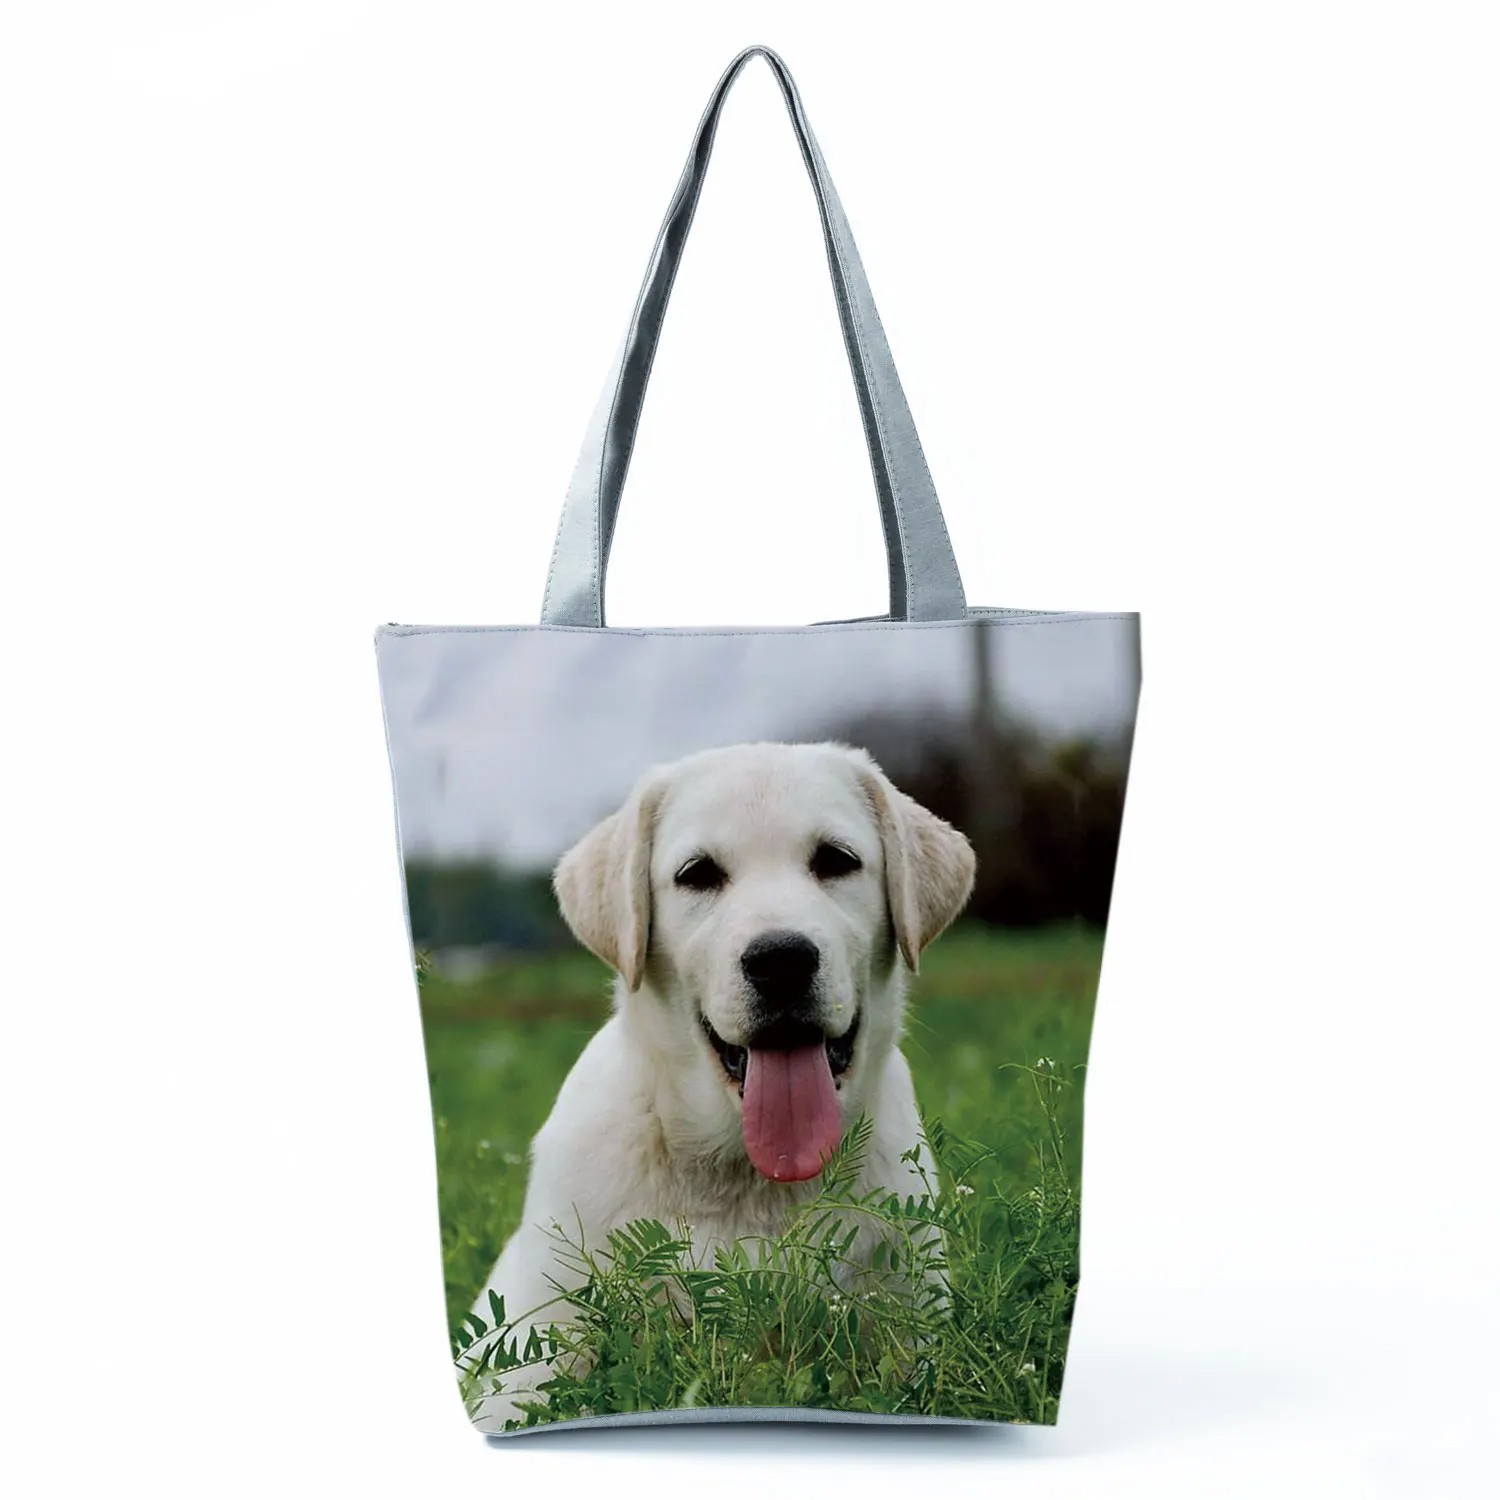 Dog Printed Women Handbags Animal Fashion Tote Shoulder Bags Large Capacity Shopping Bag Female Custom Pattern Travel Beach Bag keychain wallet Totes